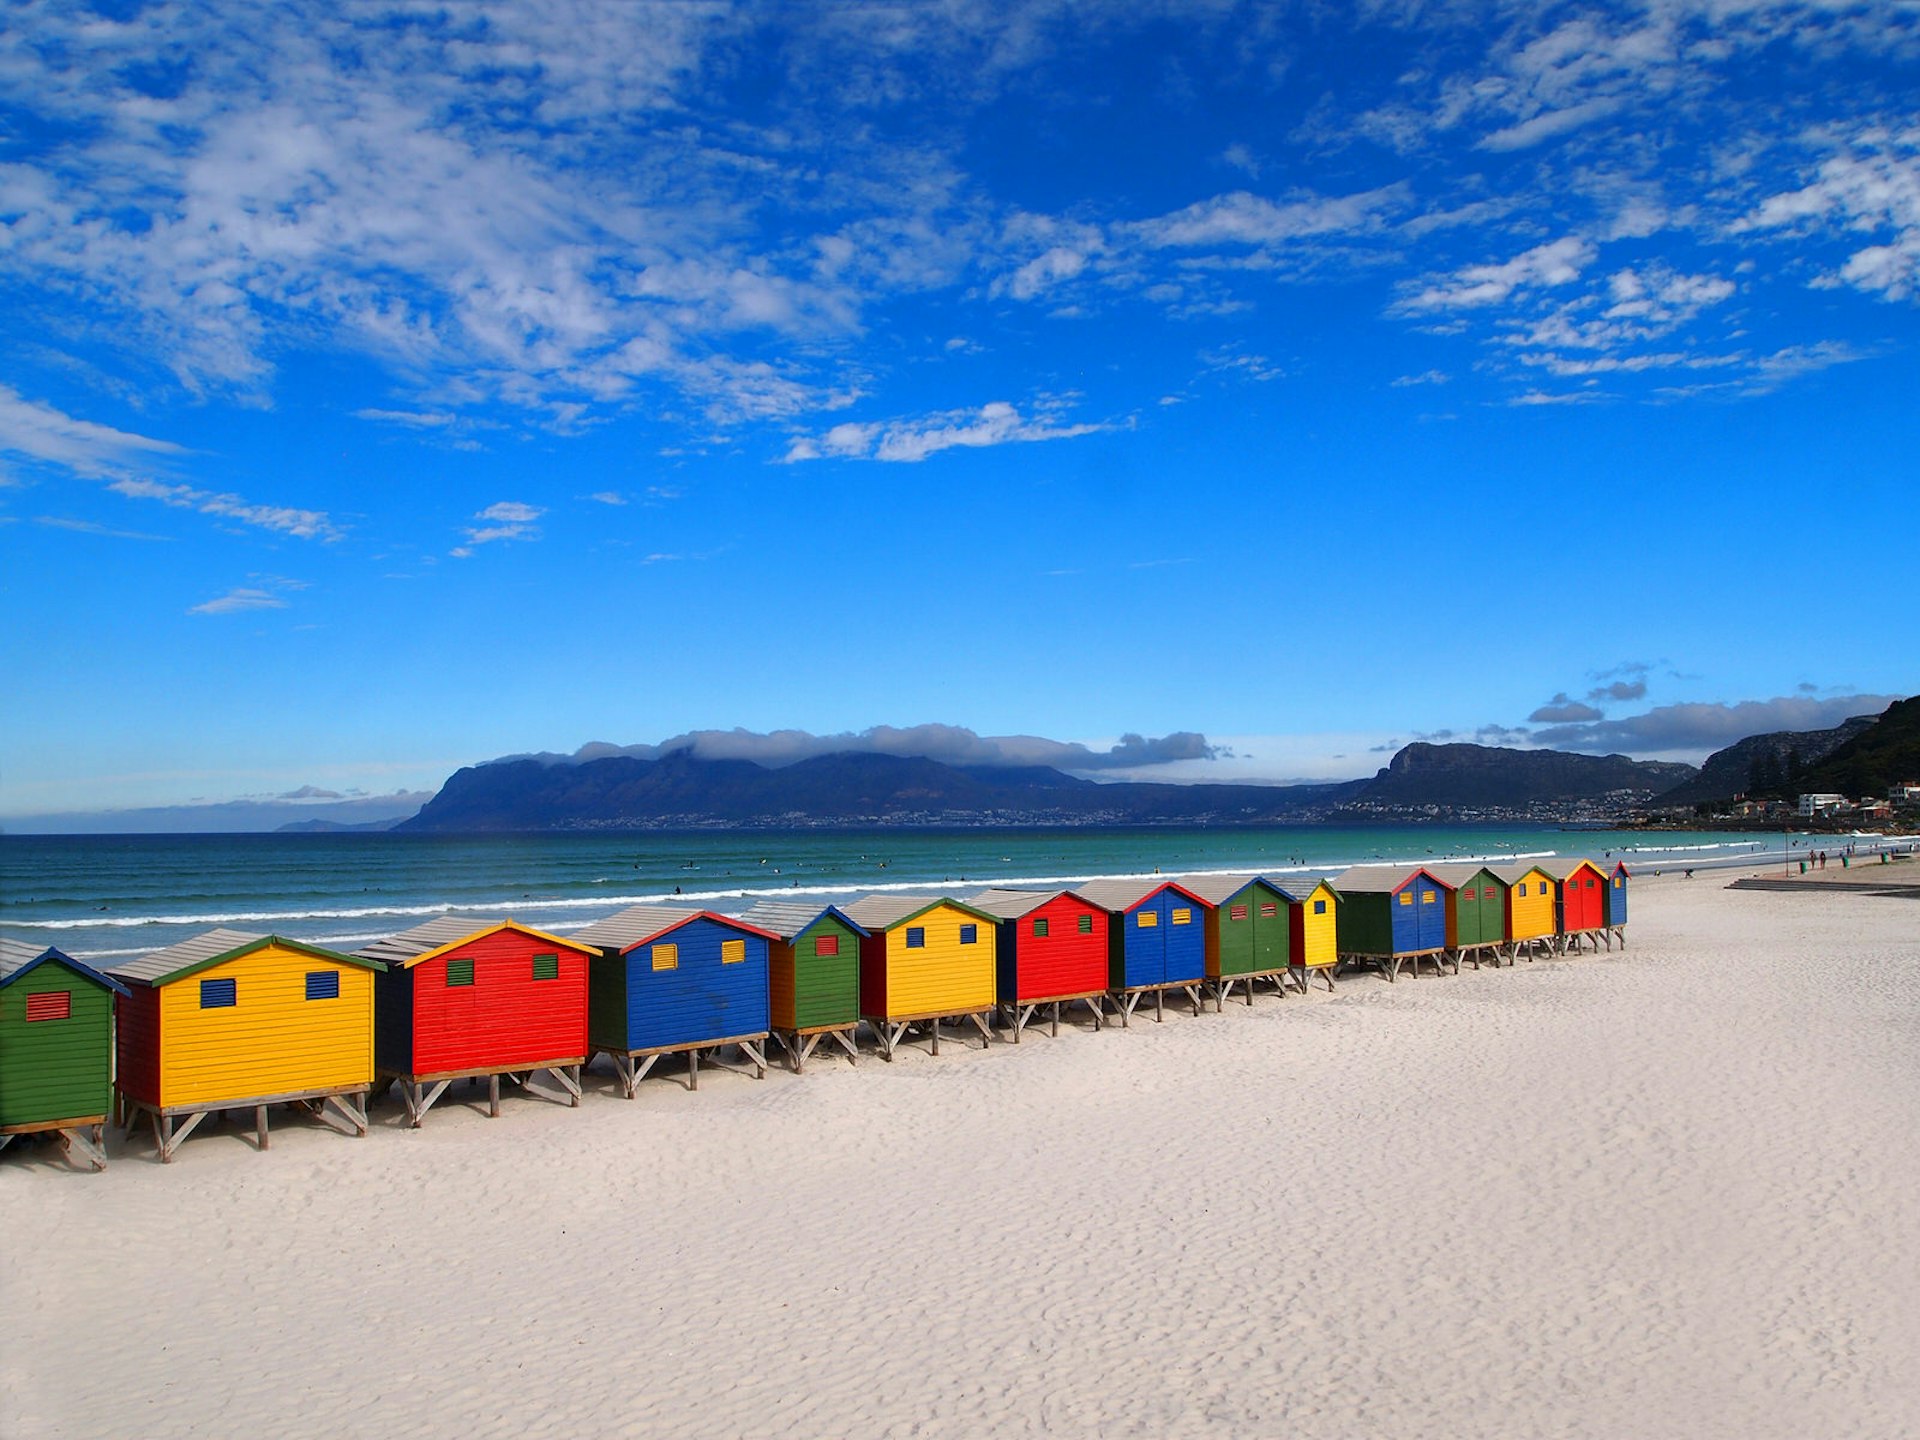 The colourful Victorian beach huts at Muizenberg © ariadna22822 / Shutterstock